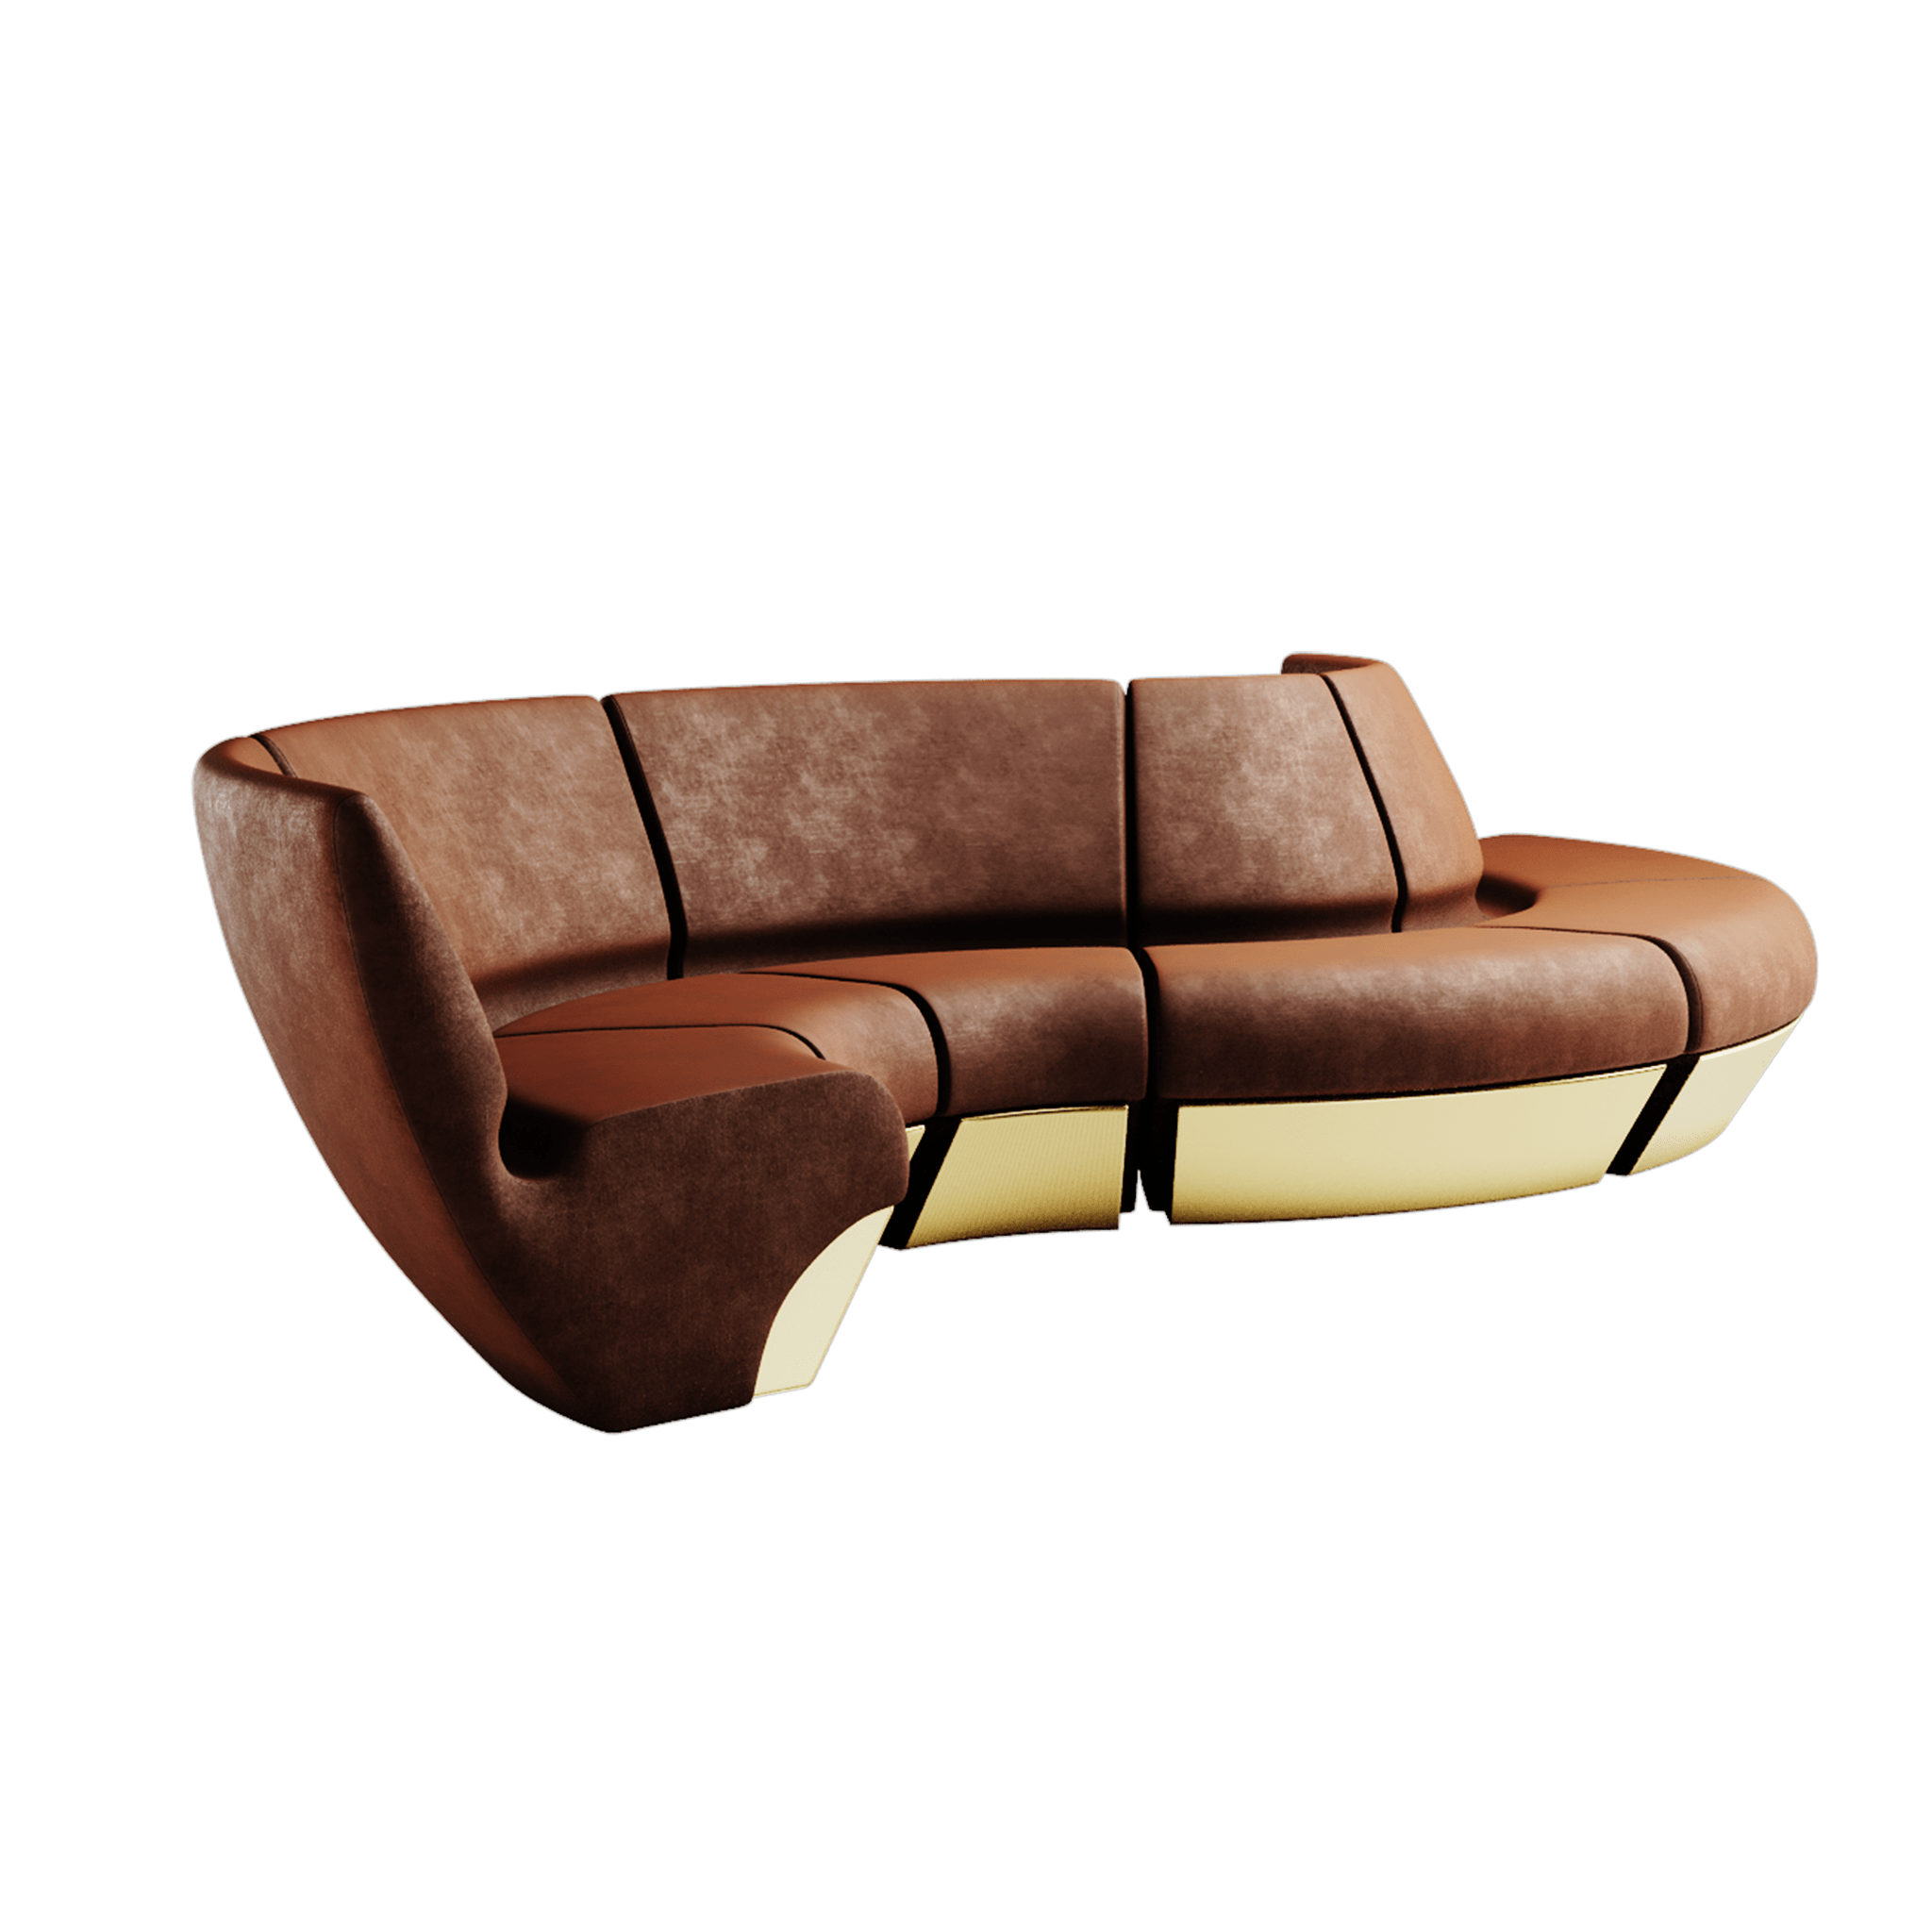 Gyvaté Serpentine Sofa by Hommés Studio